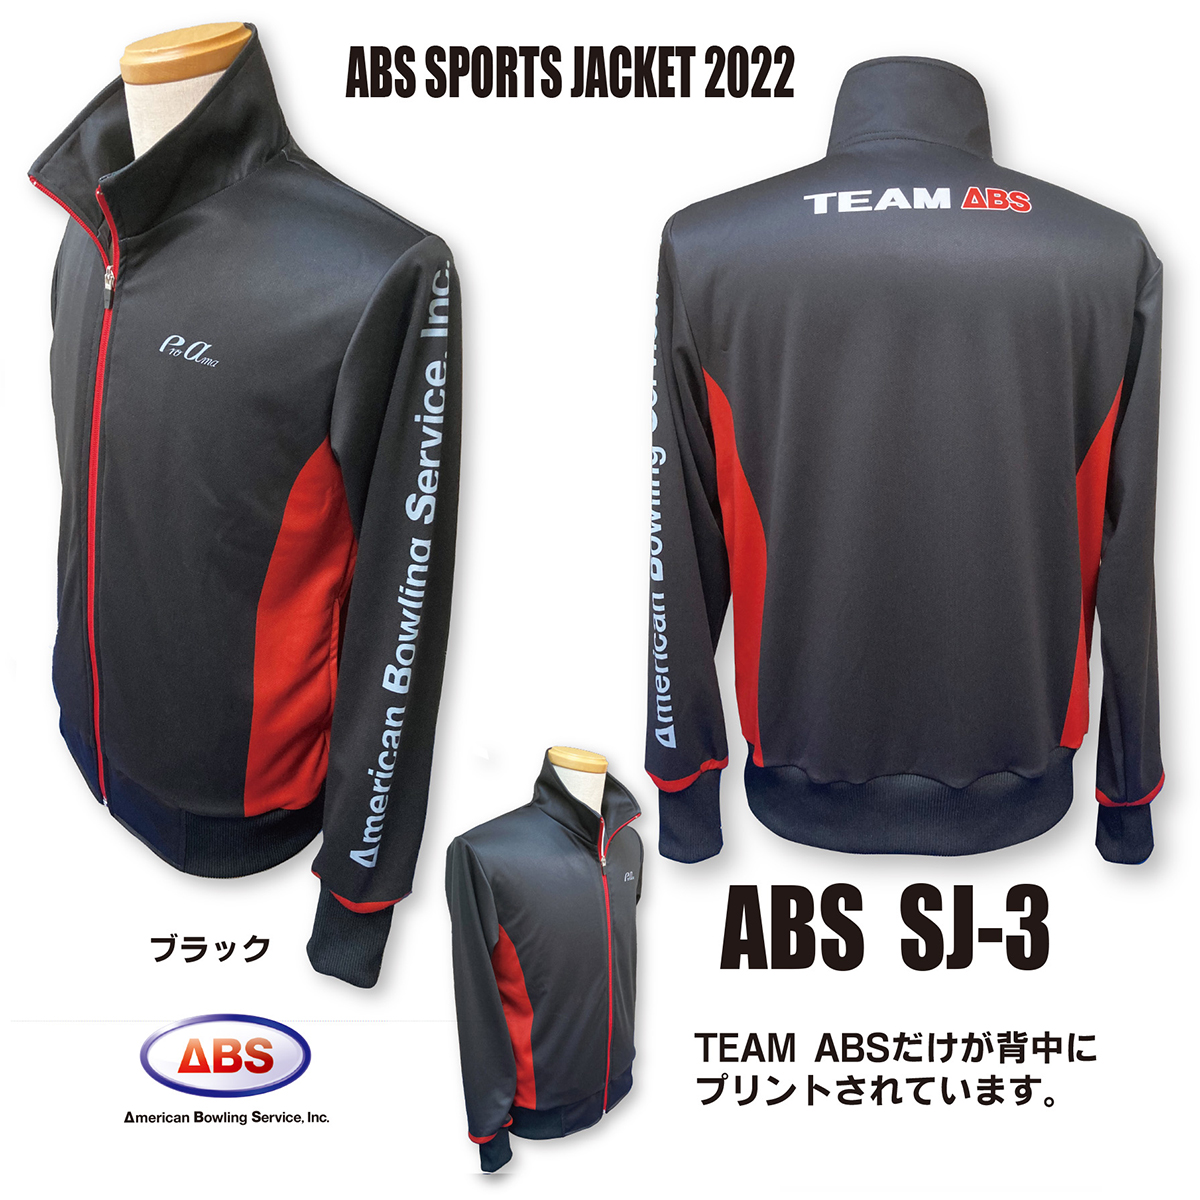 ABS スポーツジャケット2022(ABS SJ-3)(受注生産)